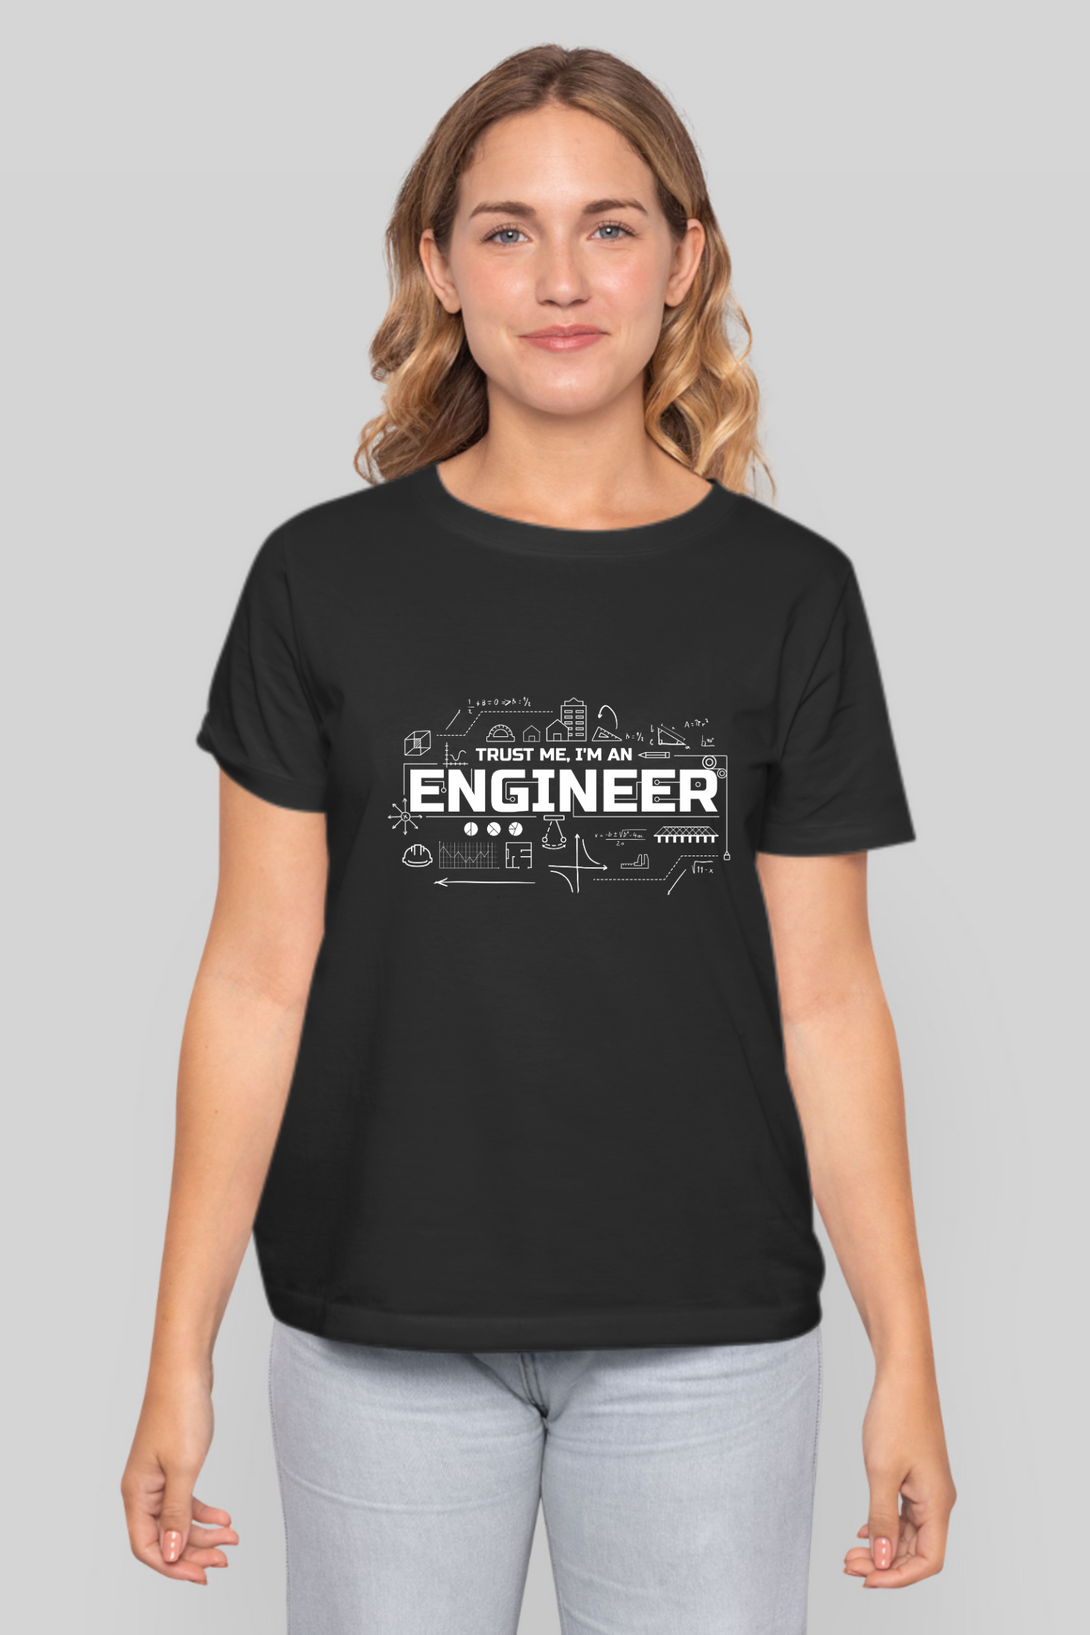 Trust Me, I'M An Engineer Printed T-Shirt For Women - WowWaves - 11